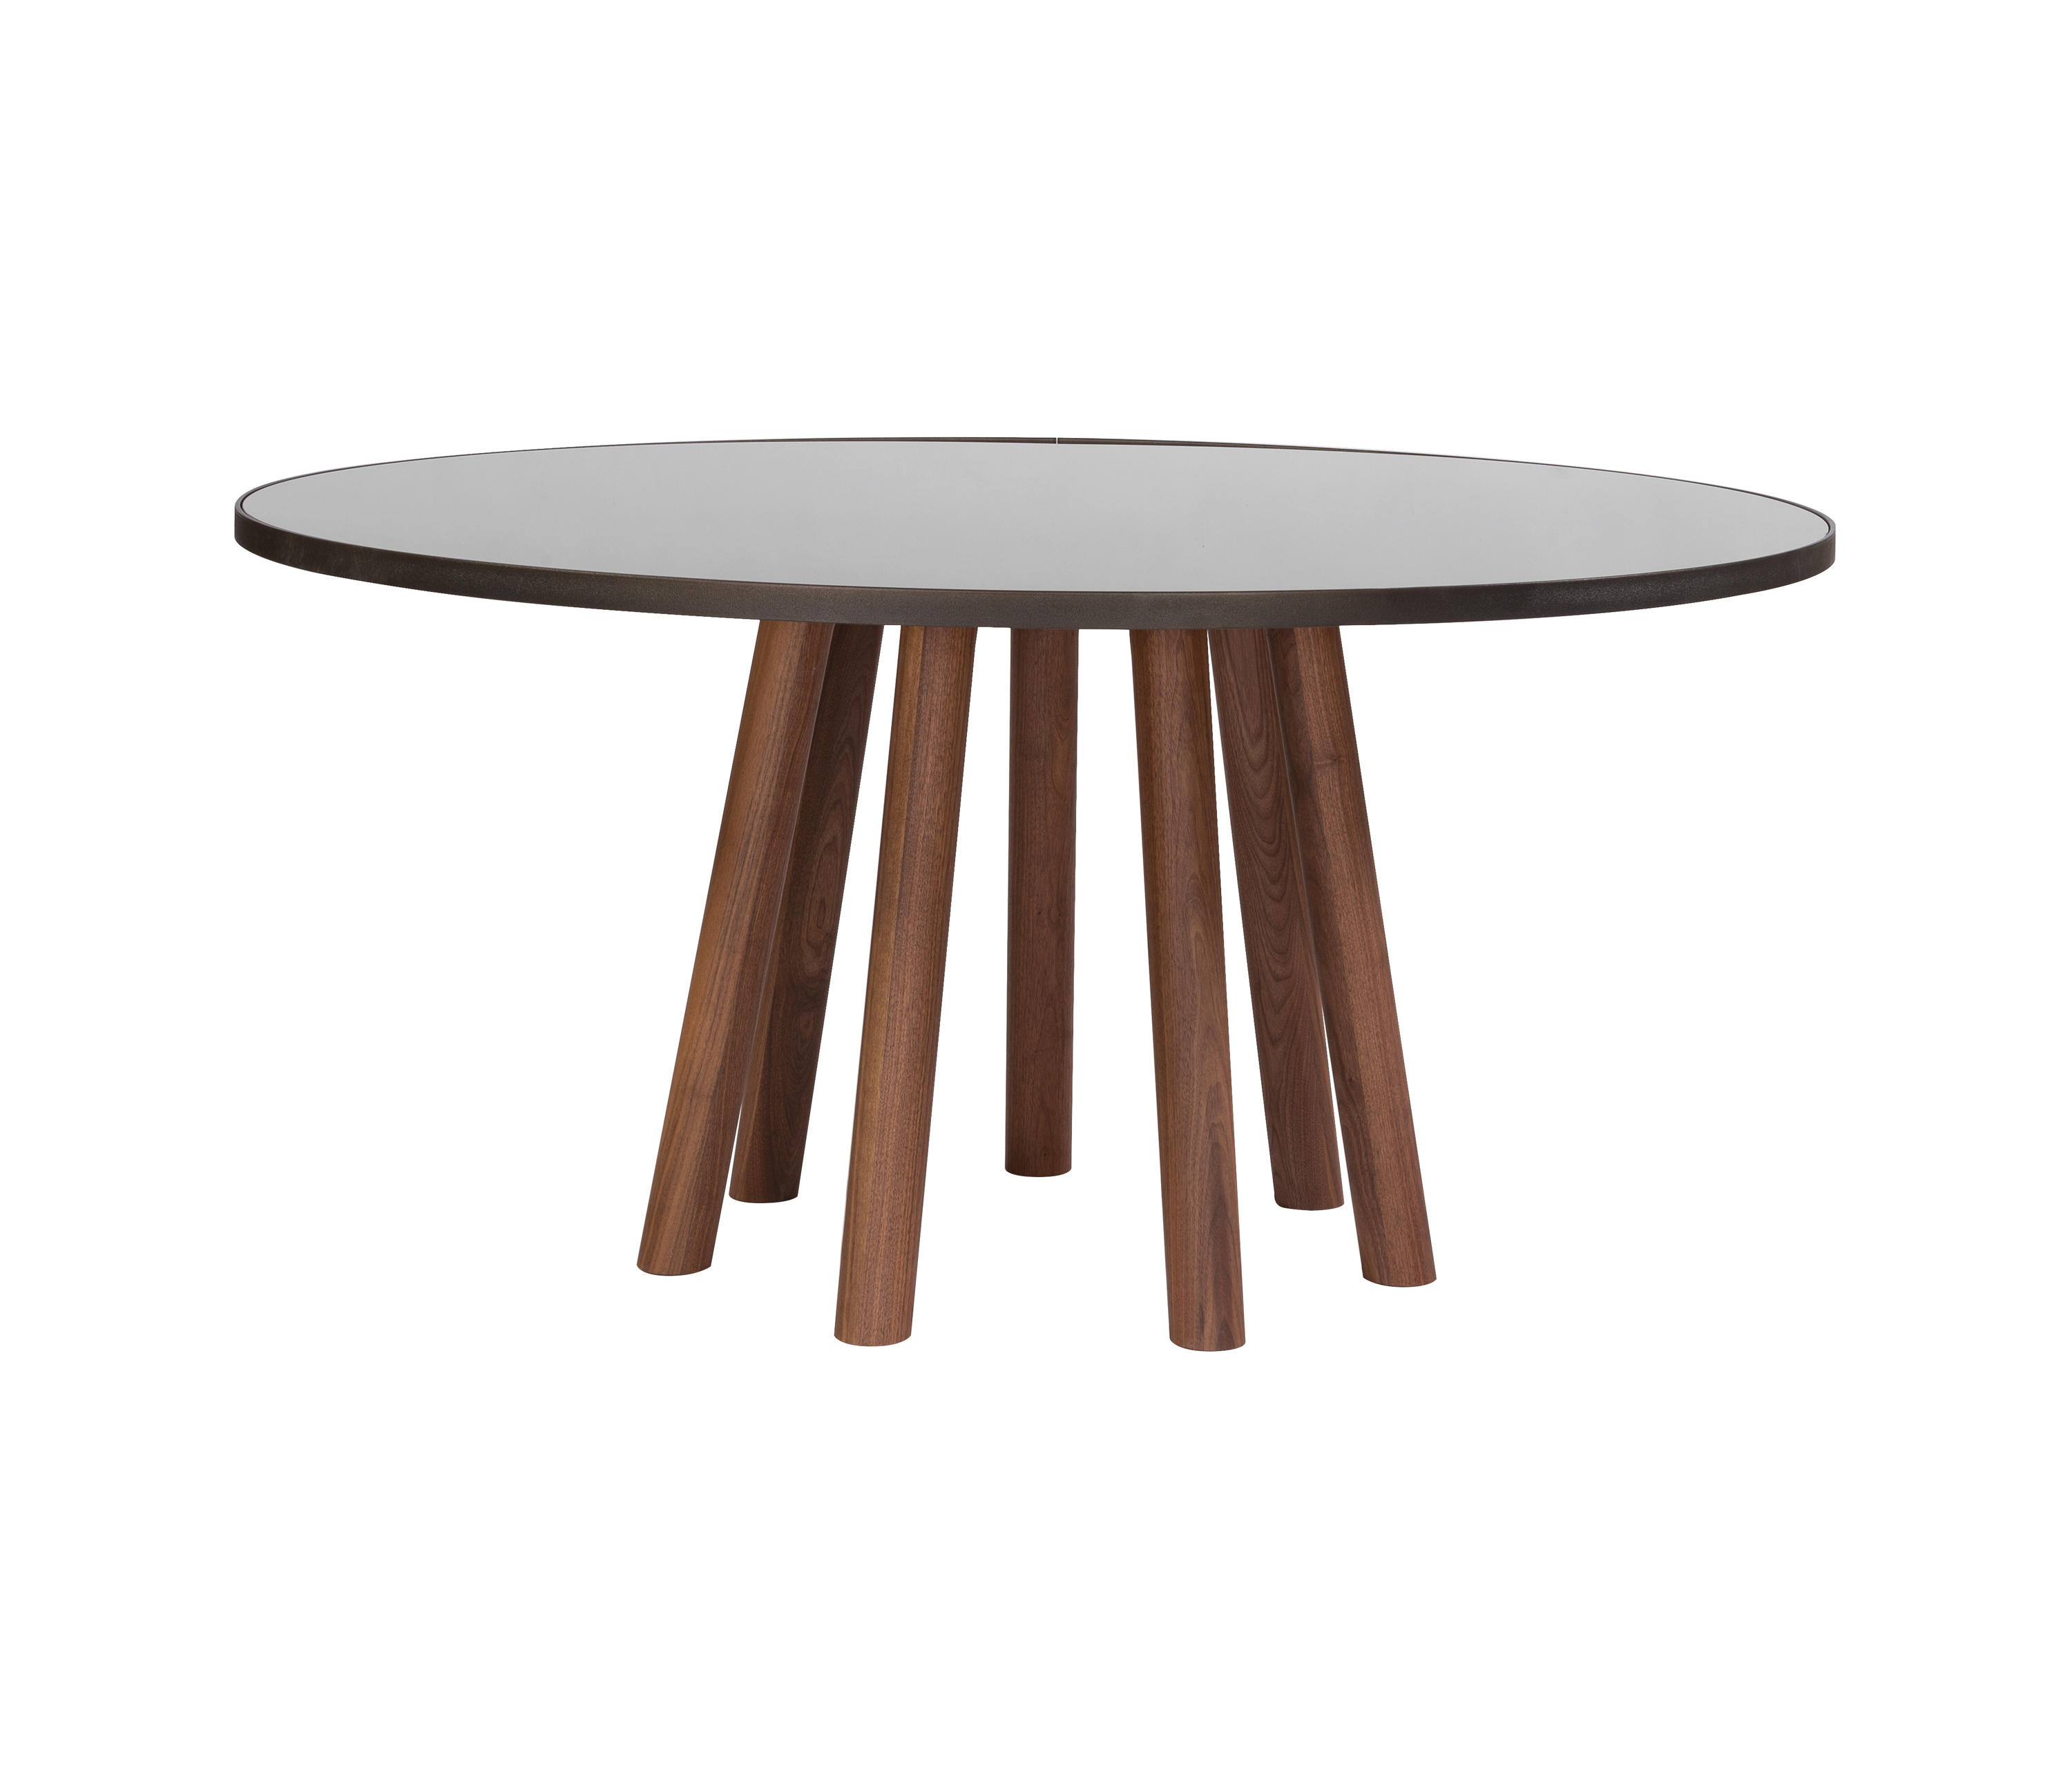 Mos-i-ko 001 RB & designer furniture | Architonic